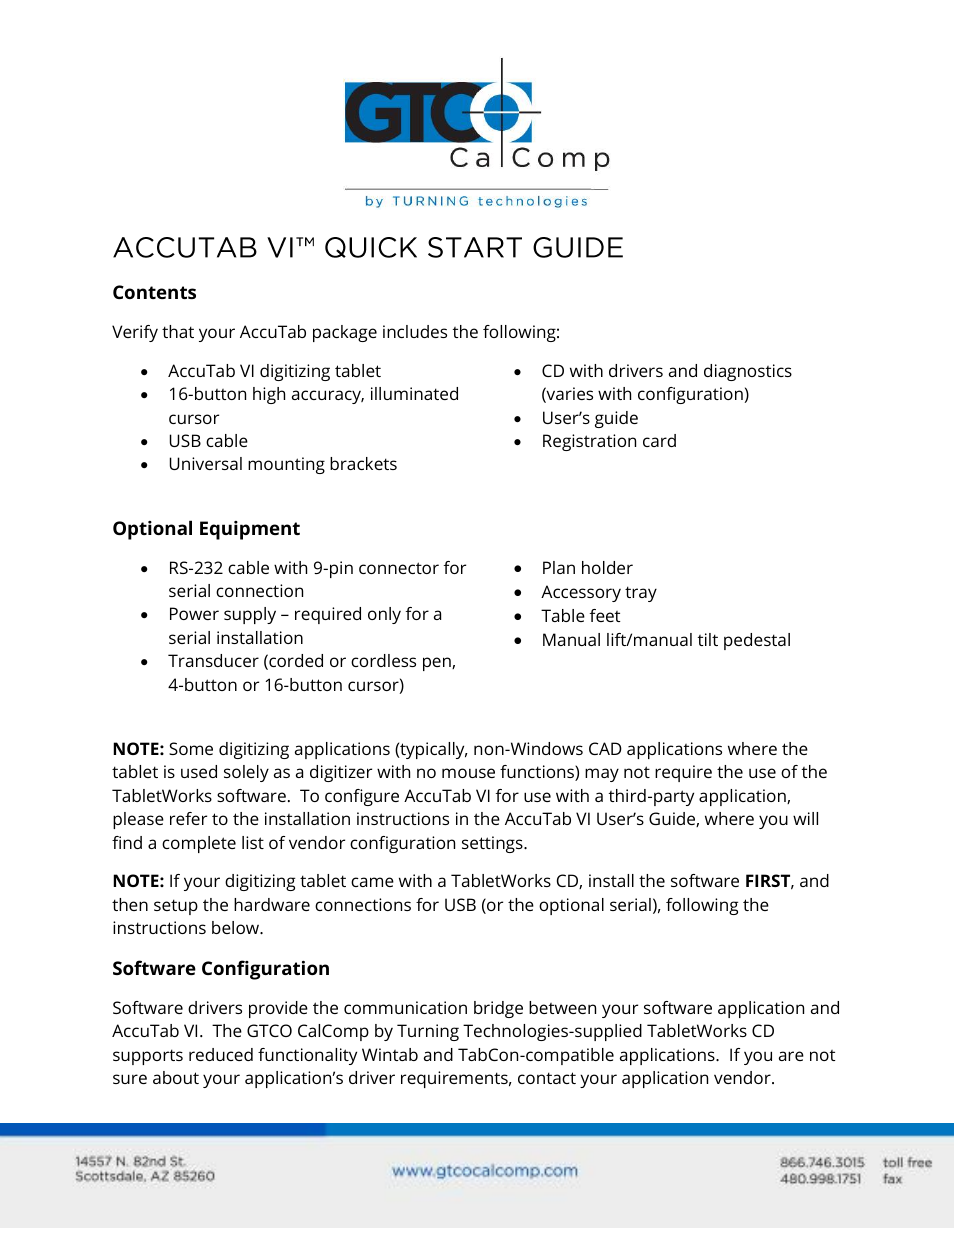 AccuTab VI - Quick Start Guide